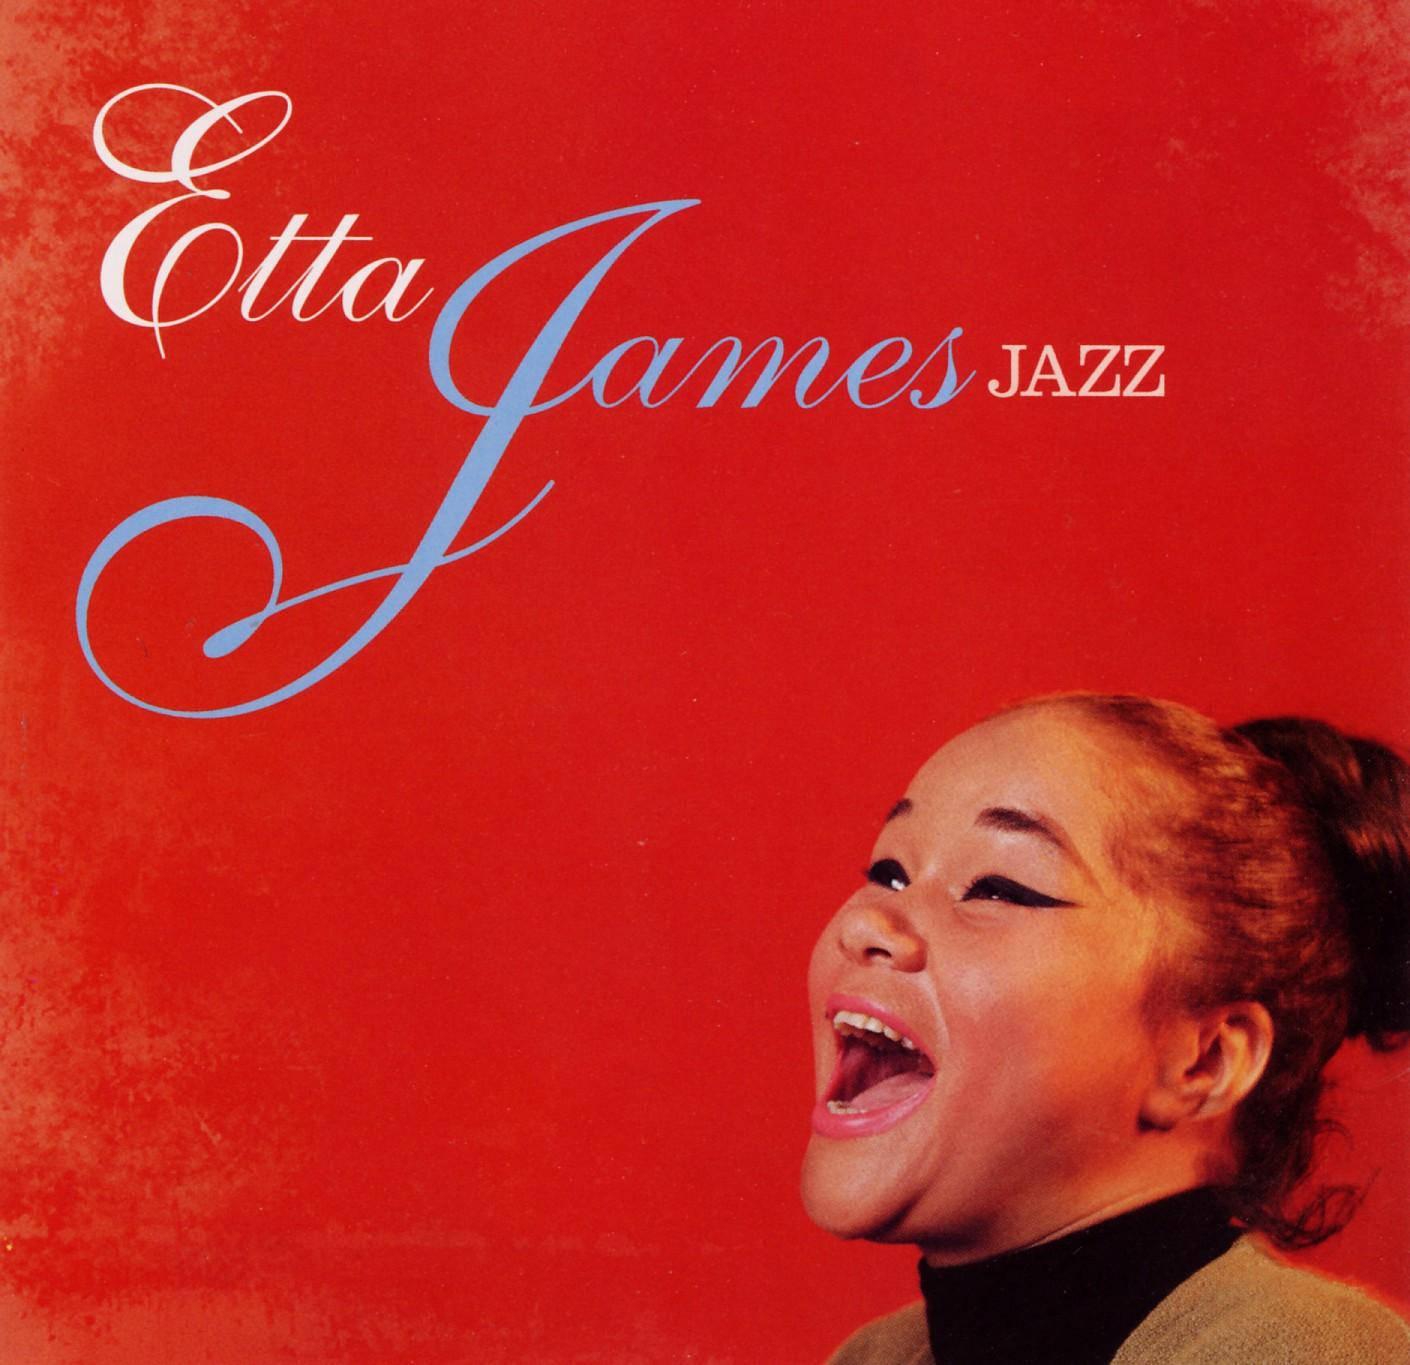 Etta James Jazz Music Album Wallpaper